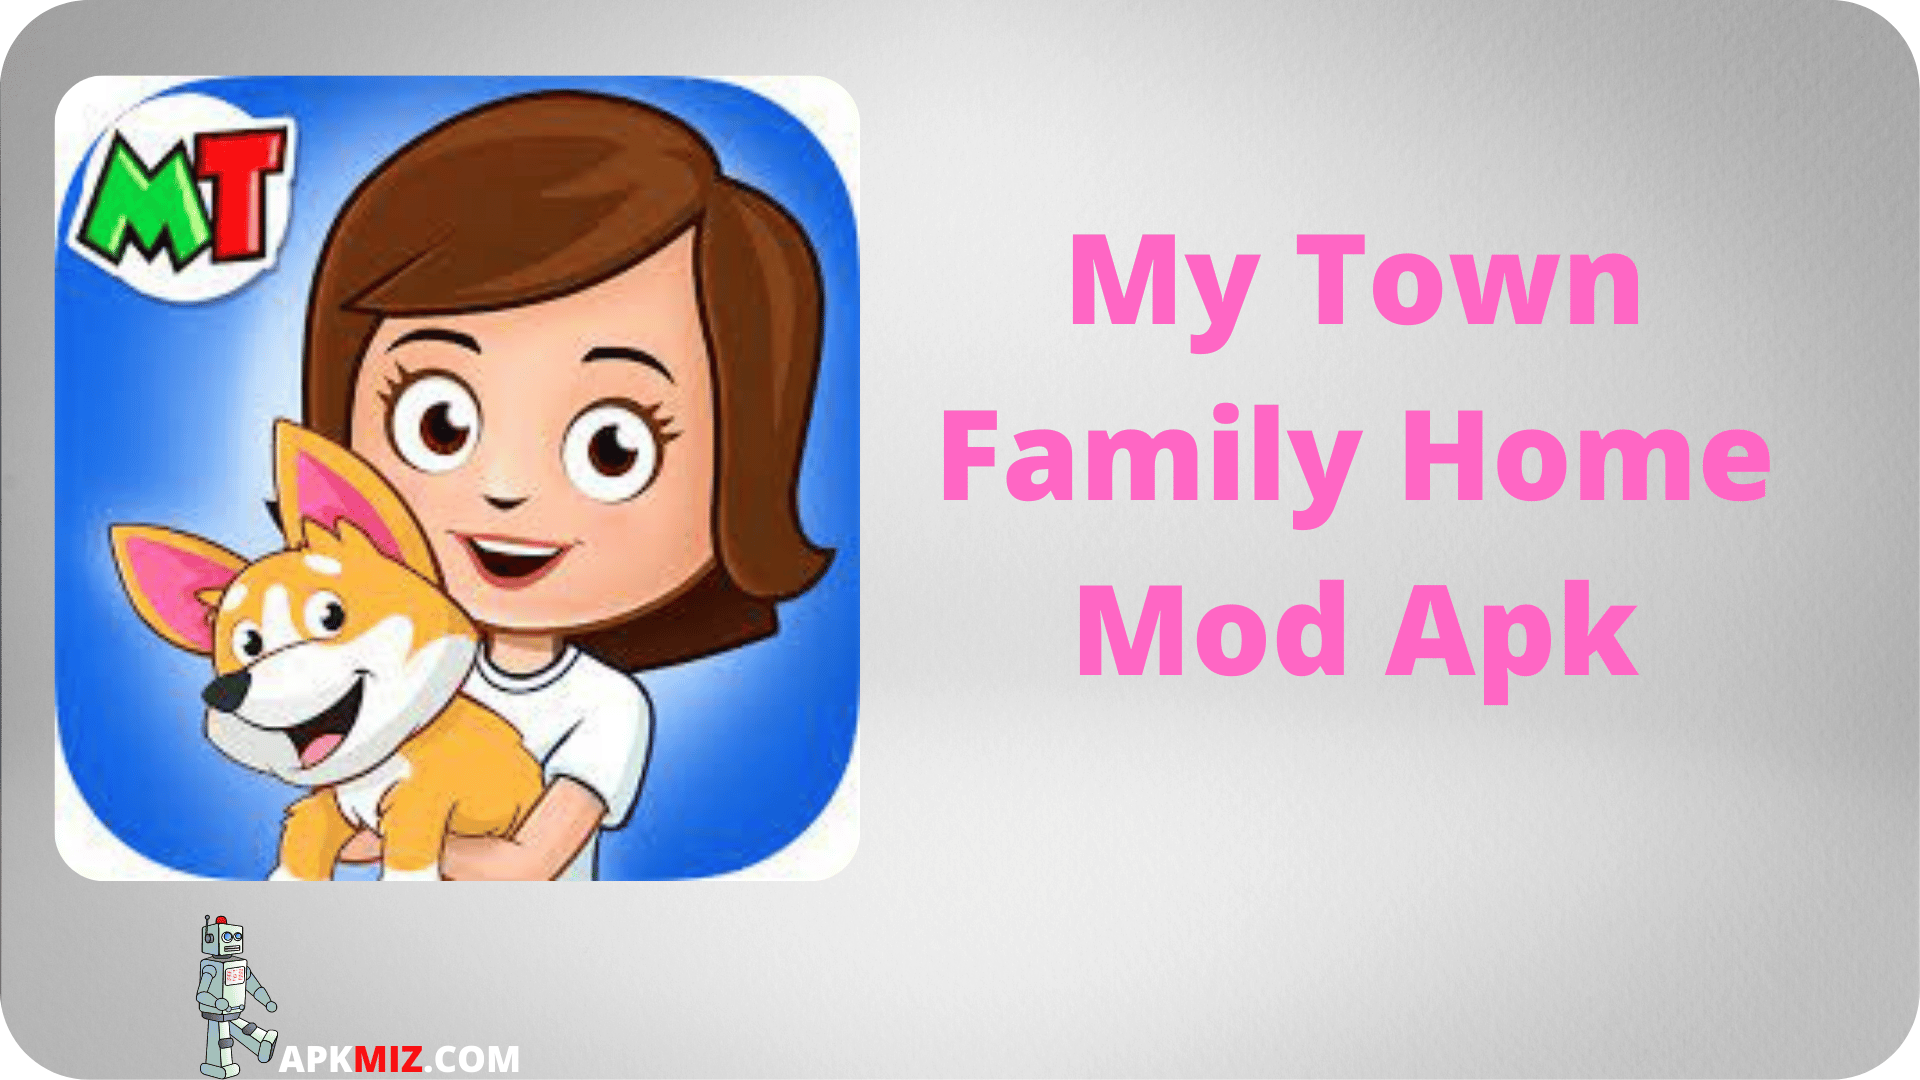 My Town Family Home Mod Apk